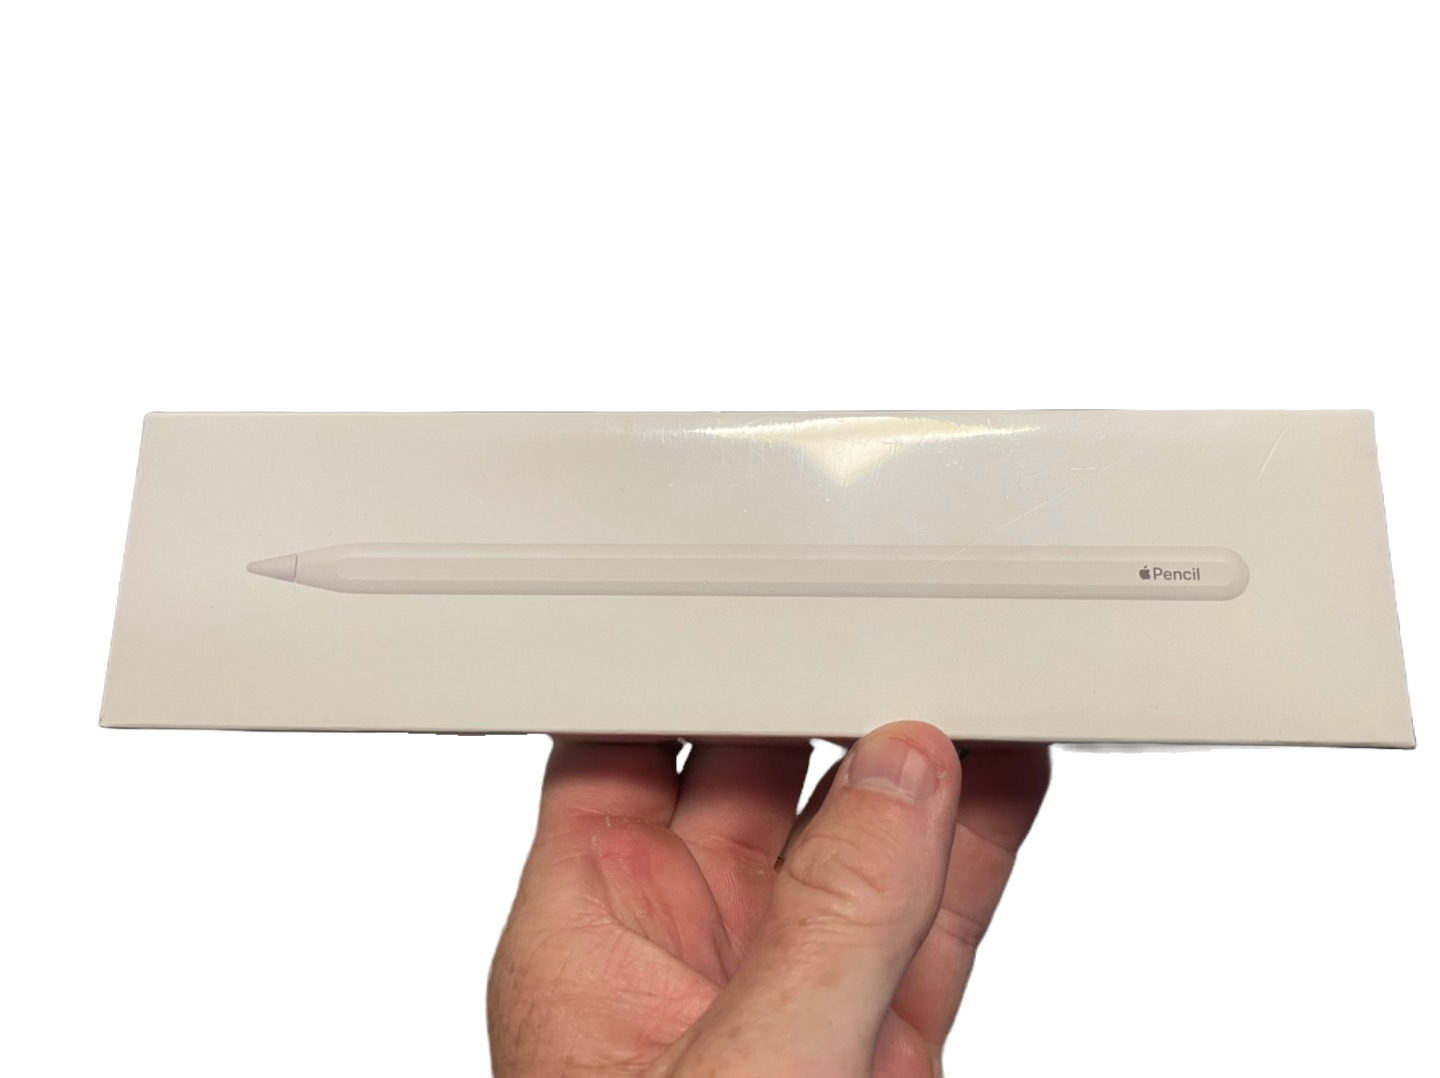 Apple Pencil 2nd Generation for iPad Stylus MU8F2AM/A Model A2051 - OPEN BOX